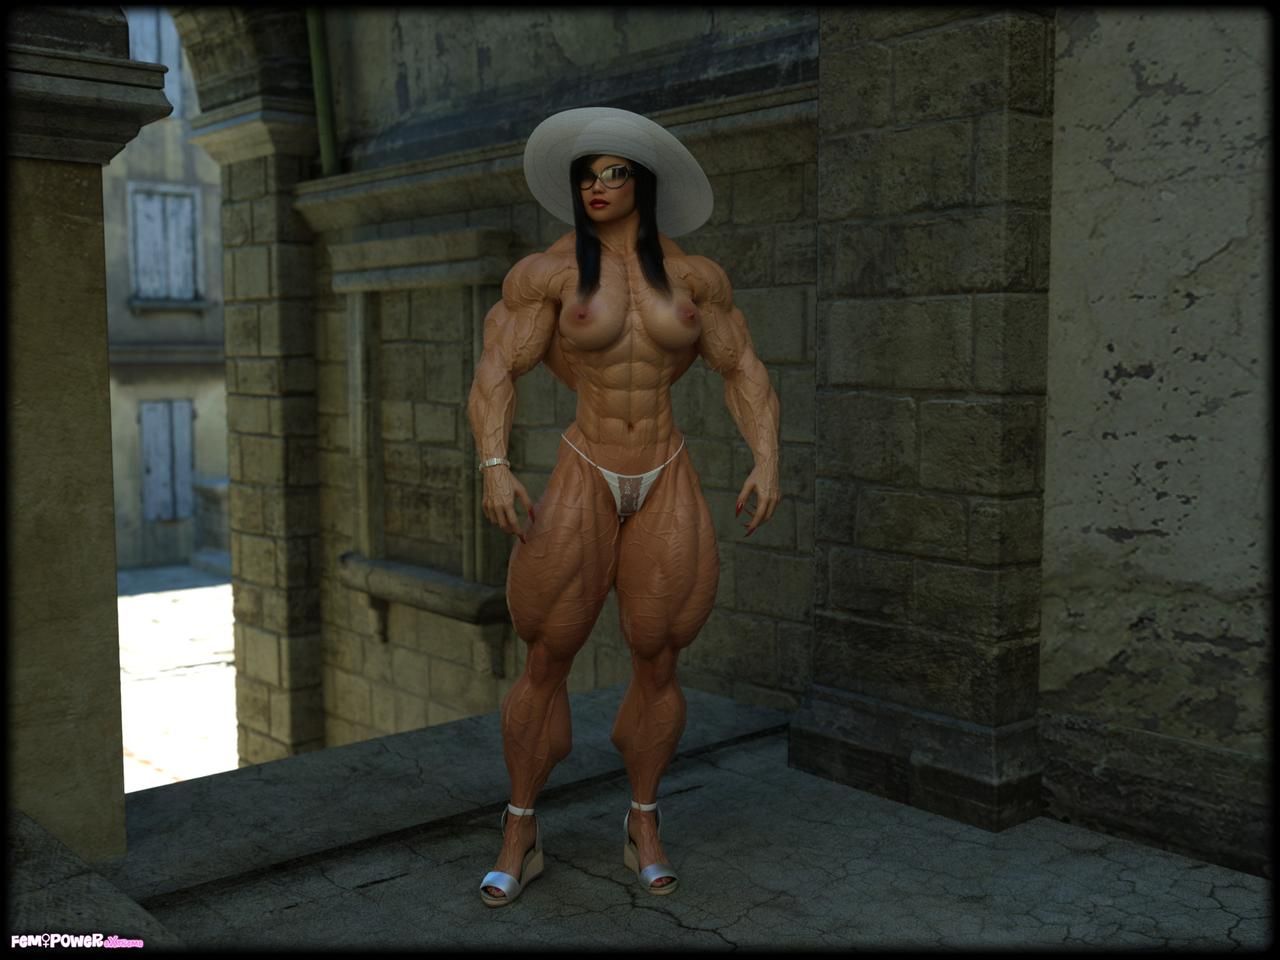 Muscle girls 3D models_ part 2 by Tigersan 109